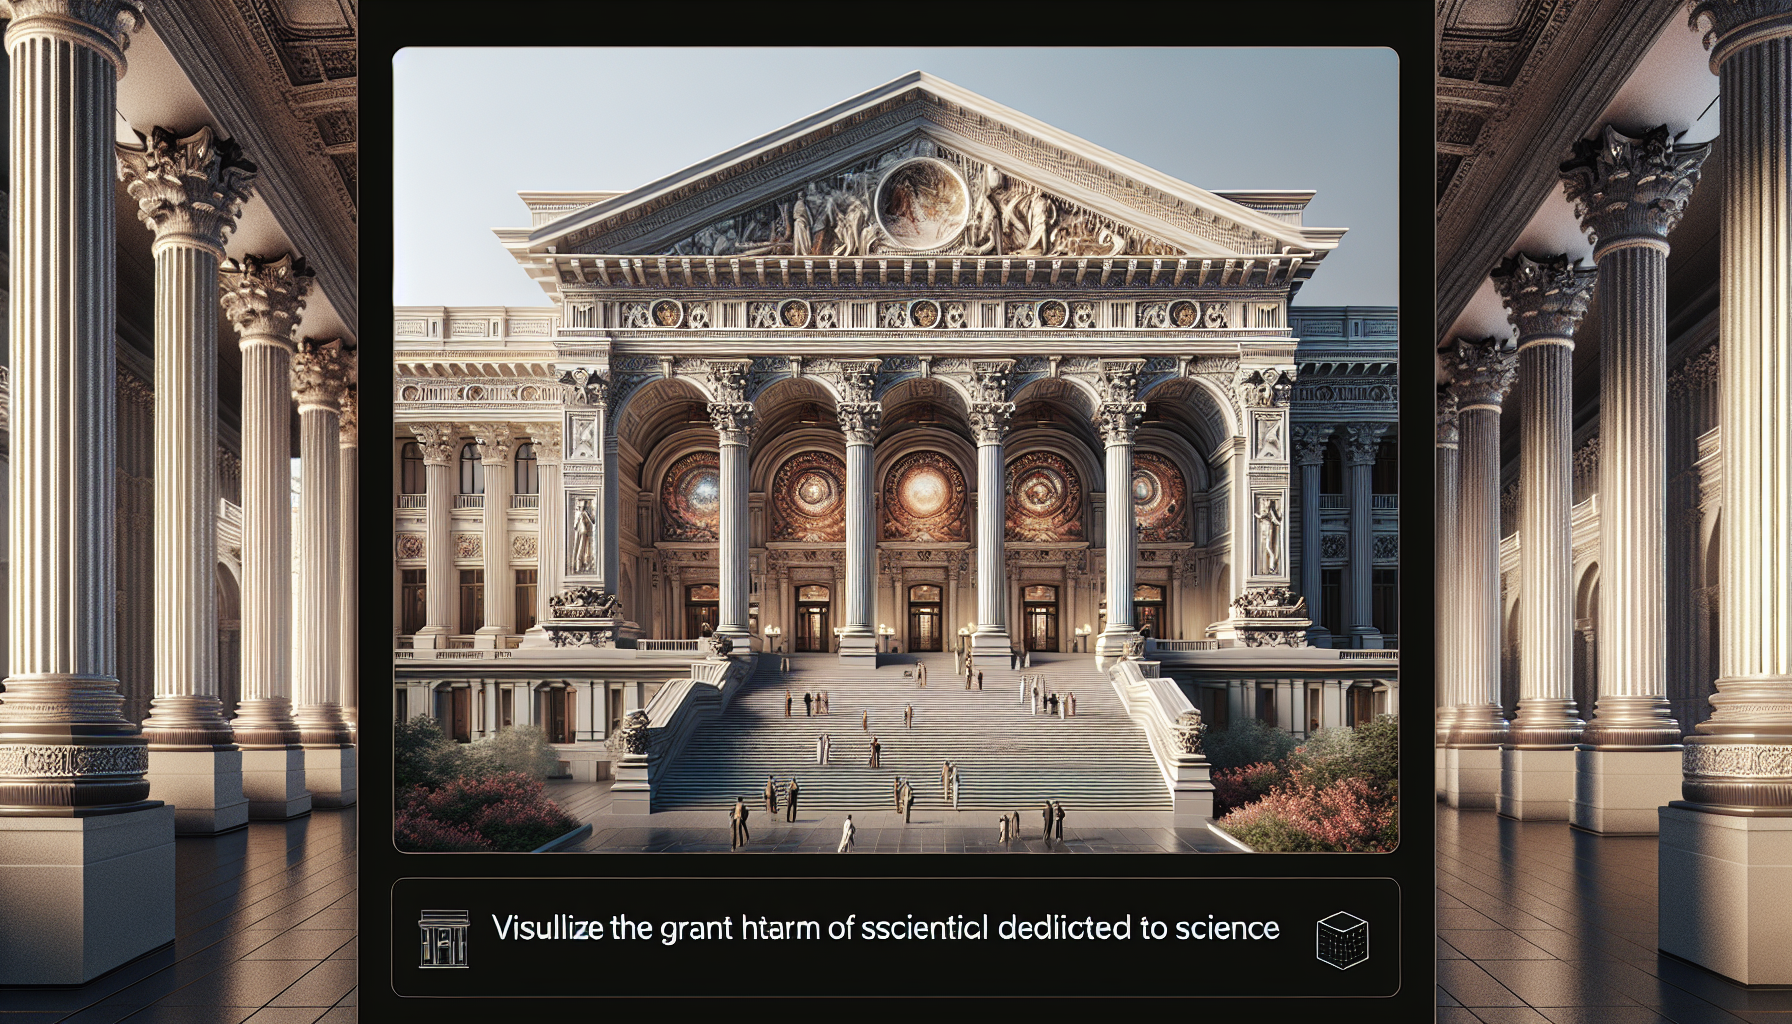 The Wagner Free Institute Of Science: Philadelphia’s Scientific Treasure